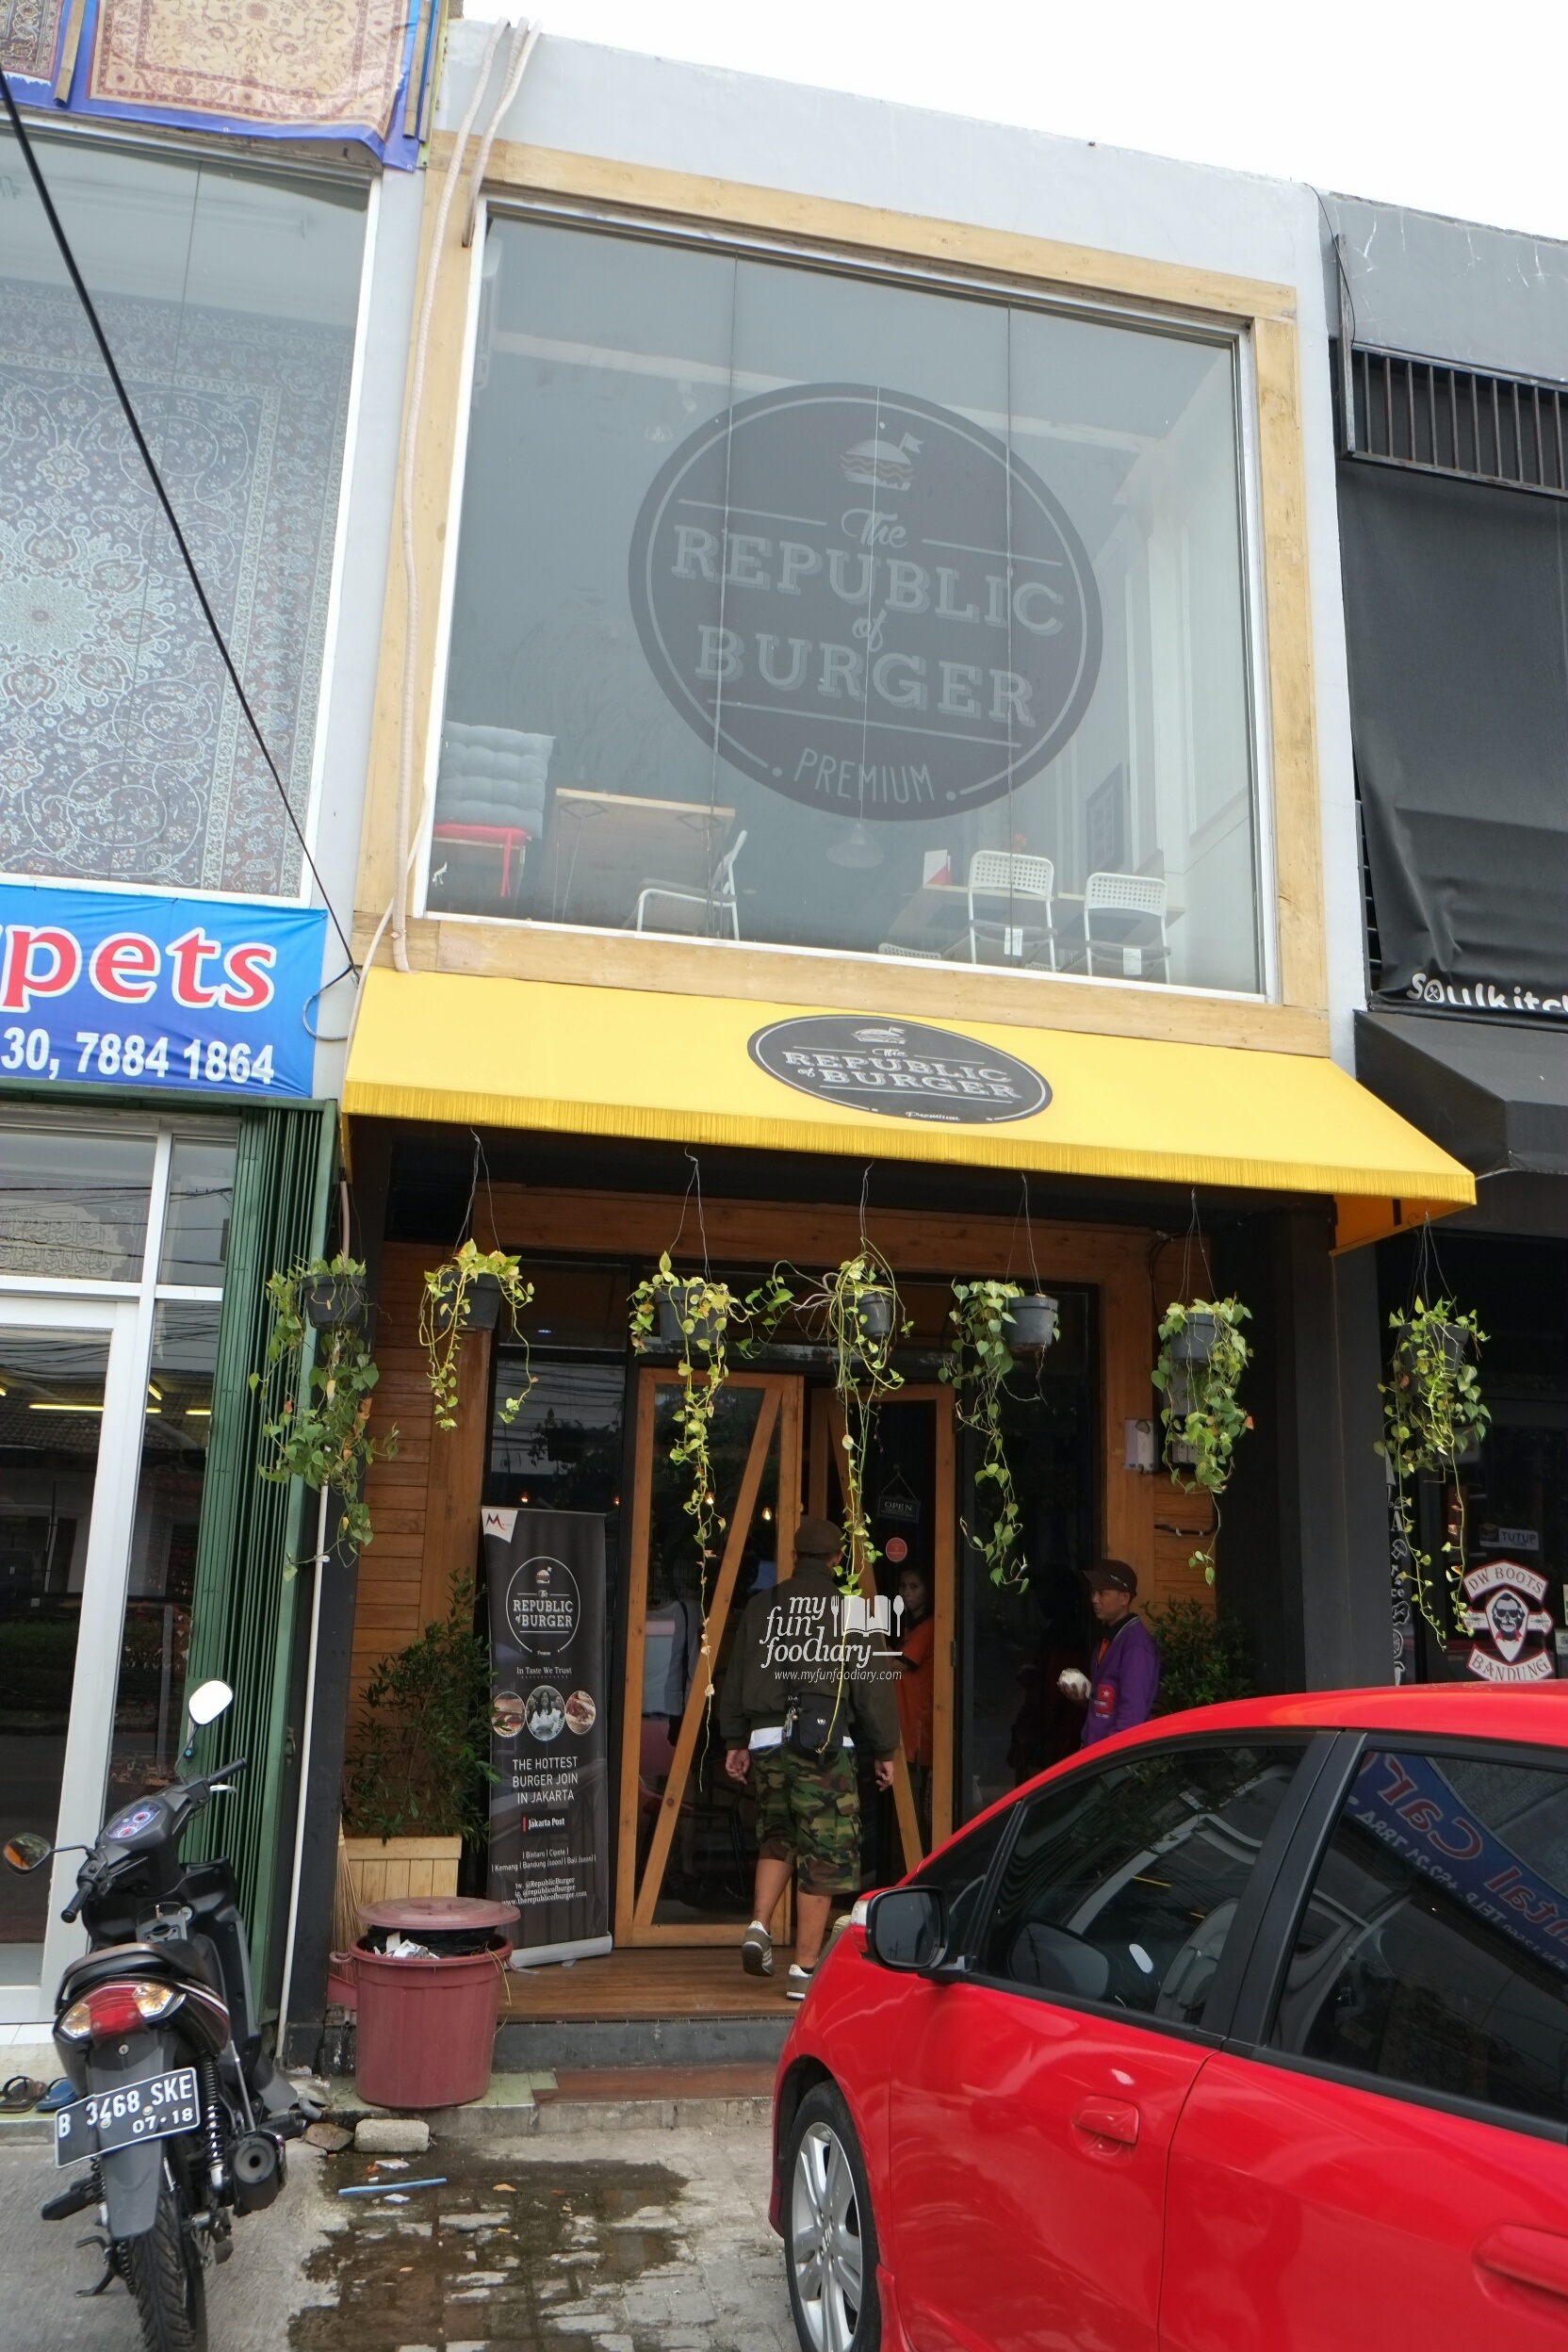 Tampak Depan The Republic of Burger Kemang by Myfunfoodiary